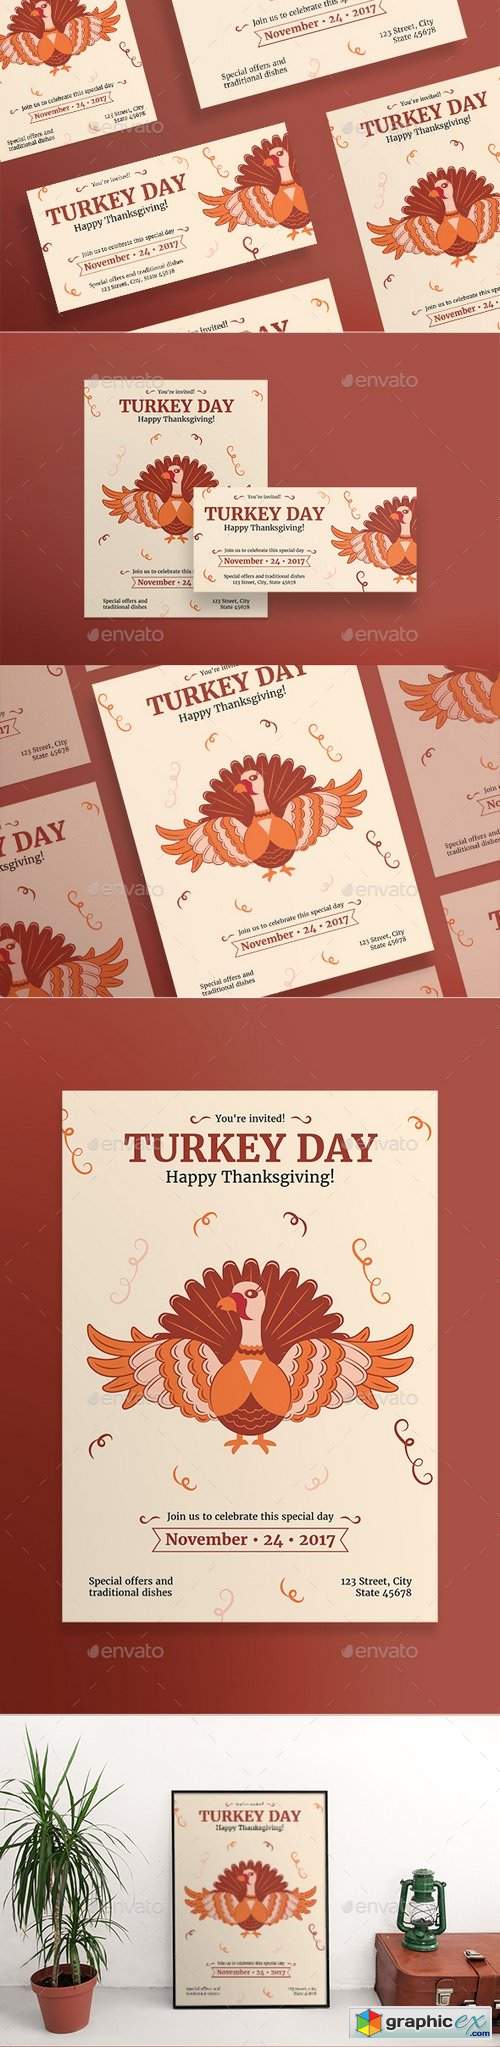 Turkey Day Flyers